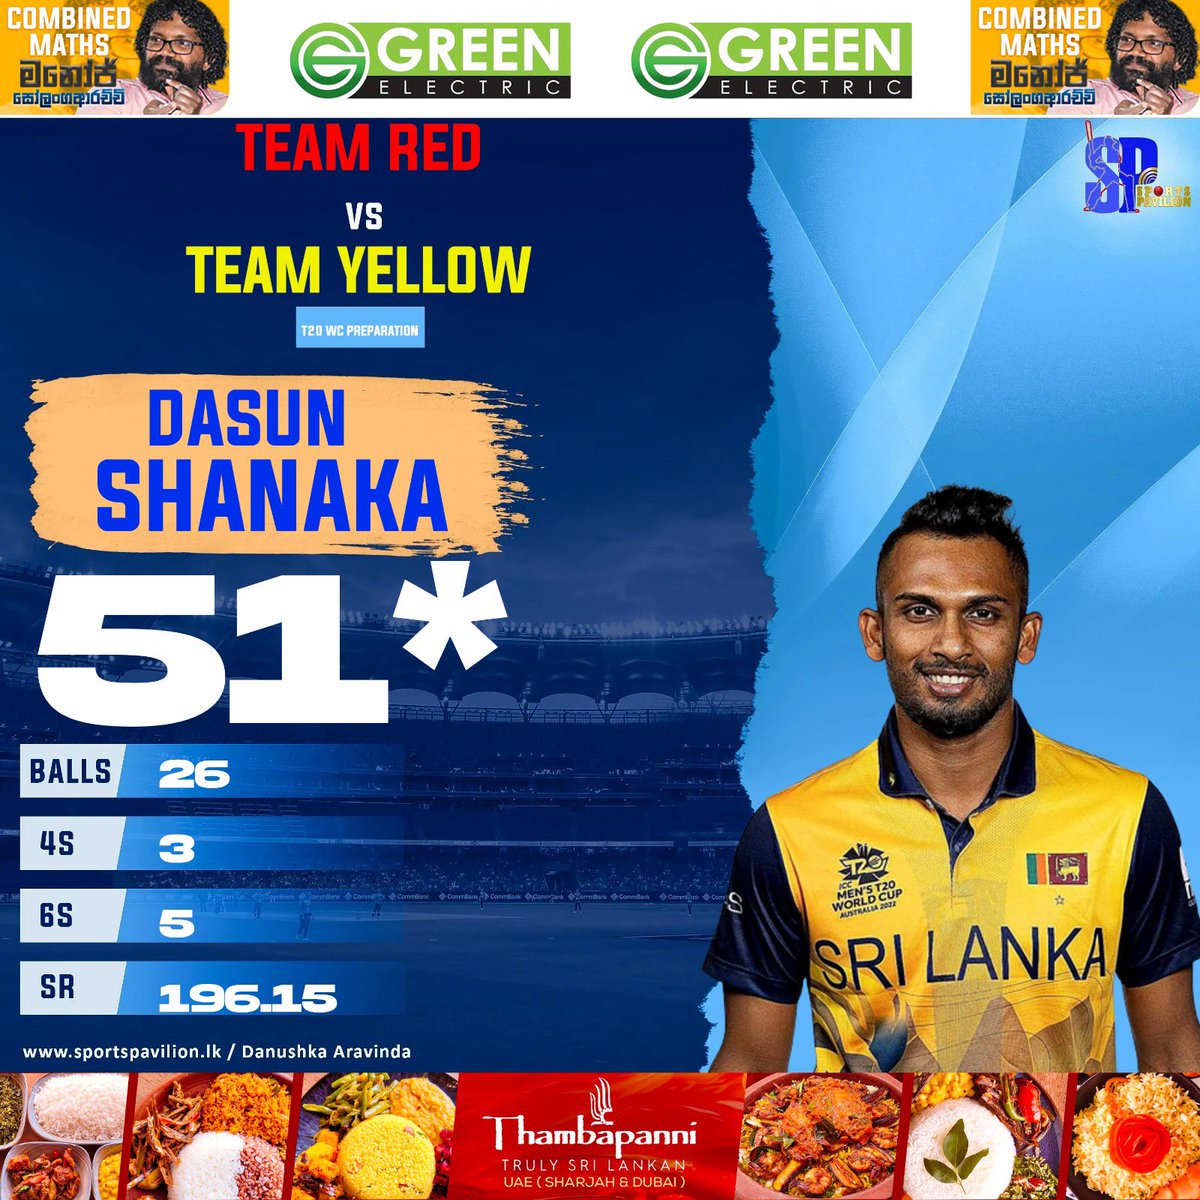 Team Red 🏏, @dasunshanaka1 scored the top fifty with five sixes. #sportspavilionlk #T20WorldCup #DasunShanaka #SriLanka #cricket #DanushkaAravinda